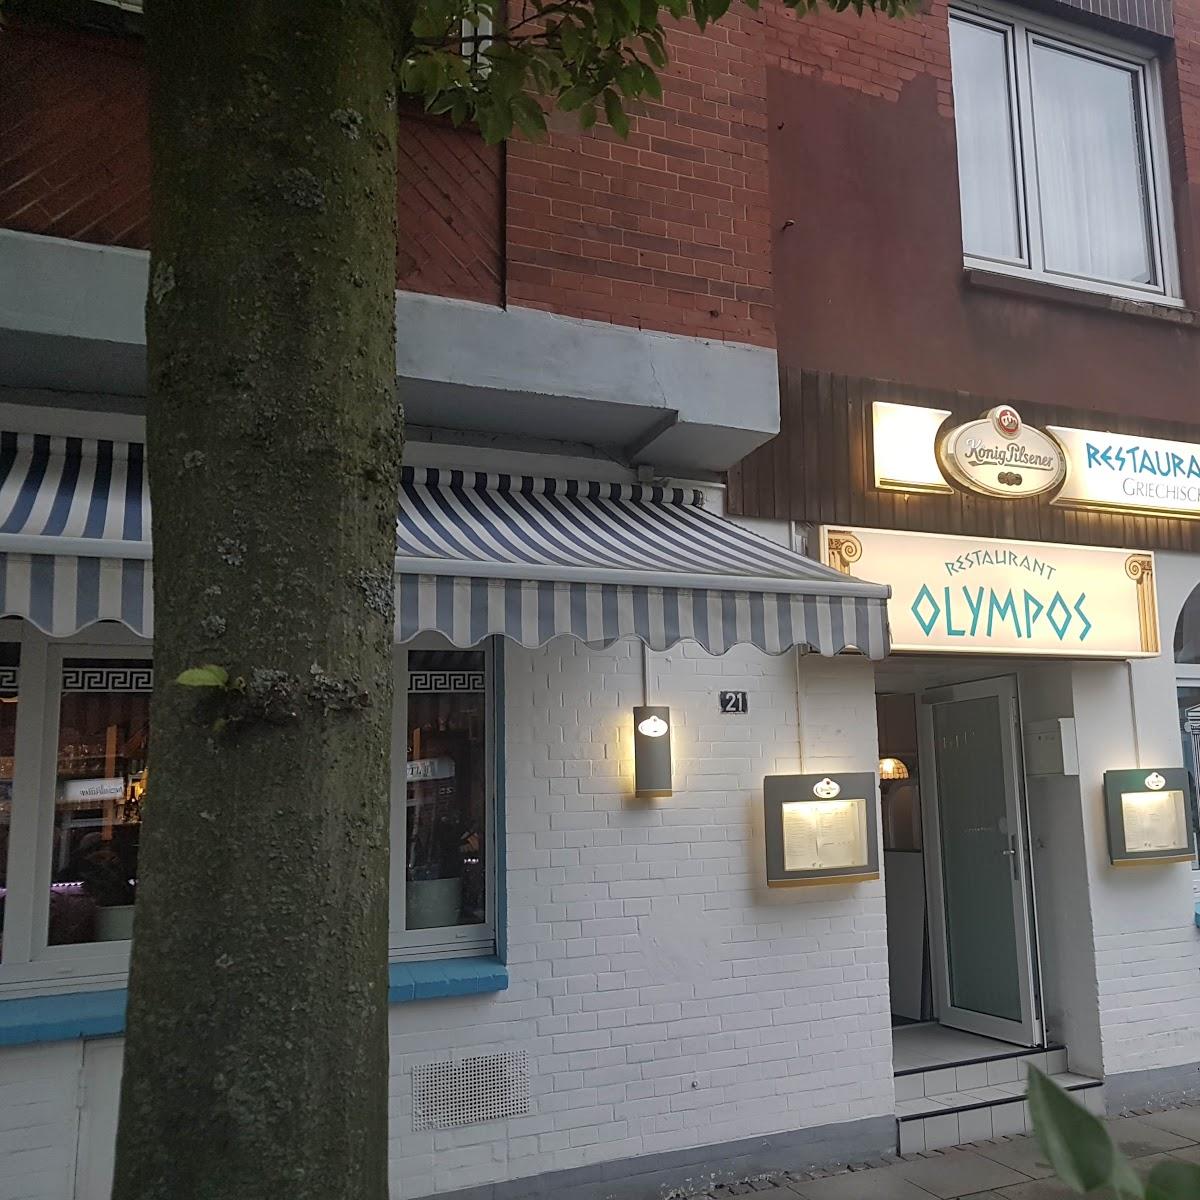 Restaurant "Taverna Olympos" in Hamburg